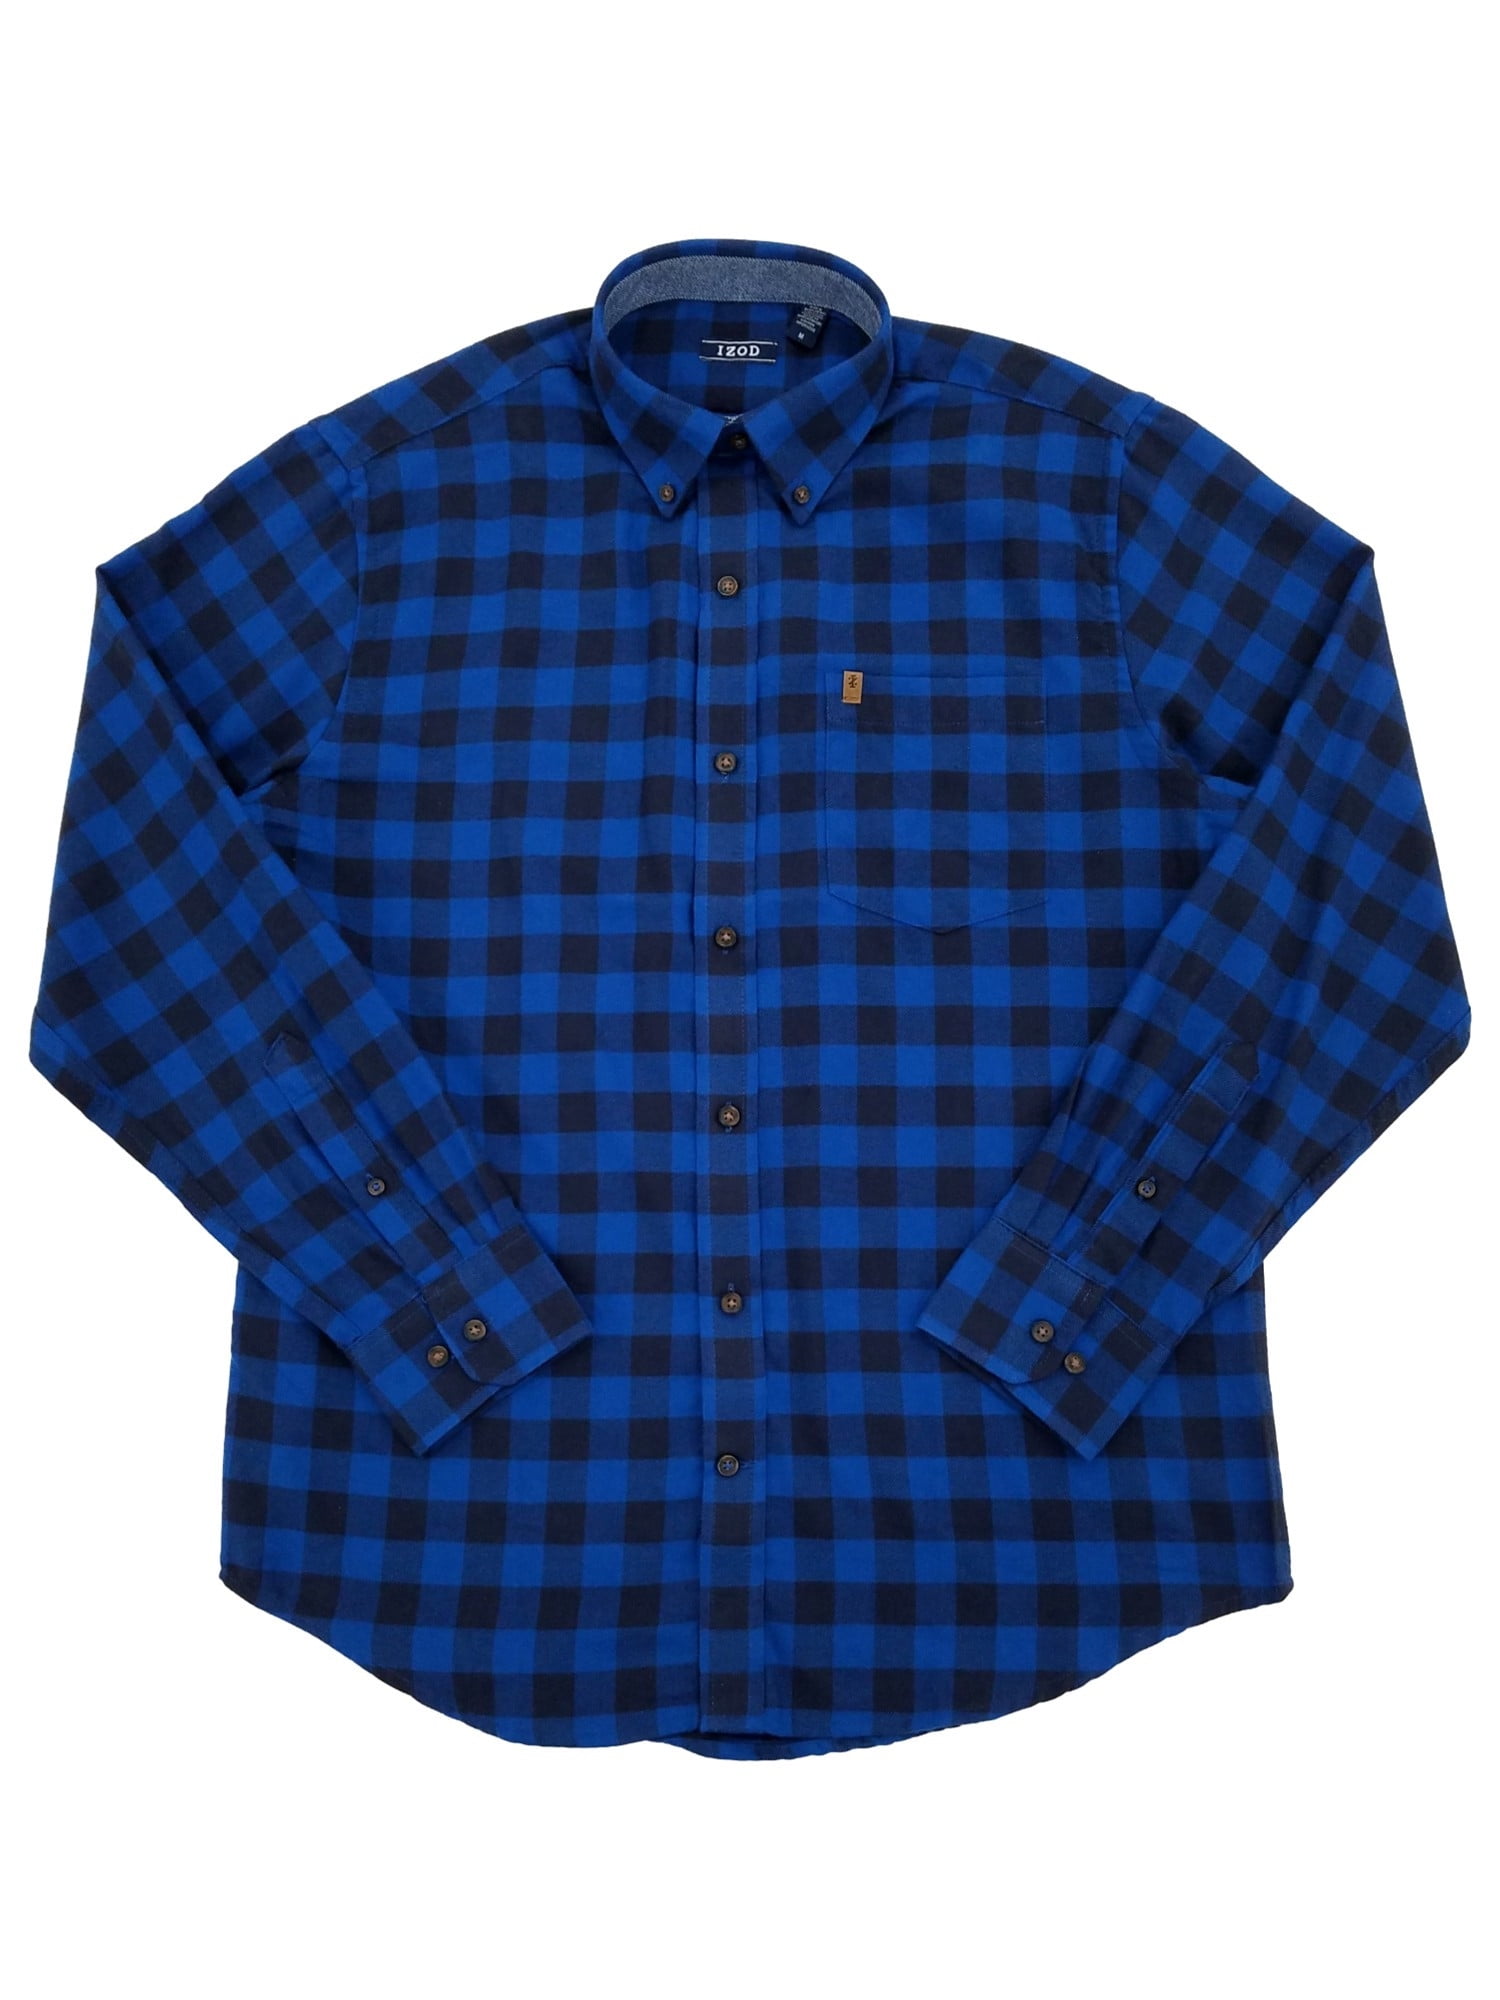 IZOD Mens Blue & Black Plaid Long Sleeve Button-Down Flannel Shirt XX-Large